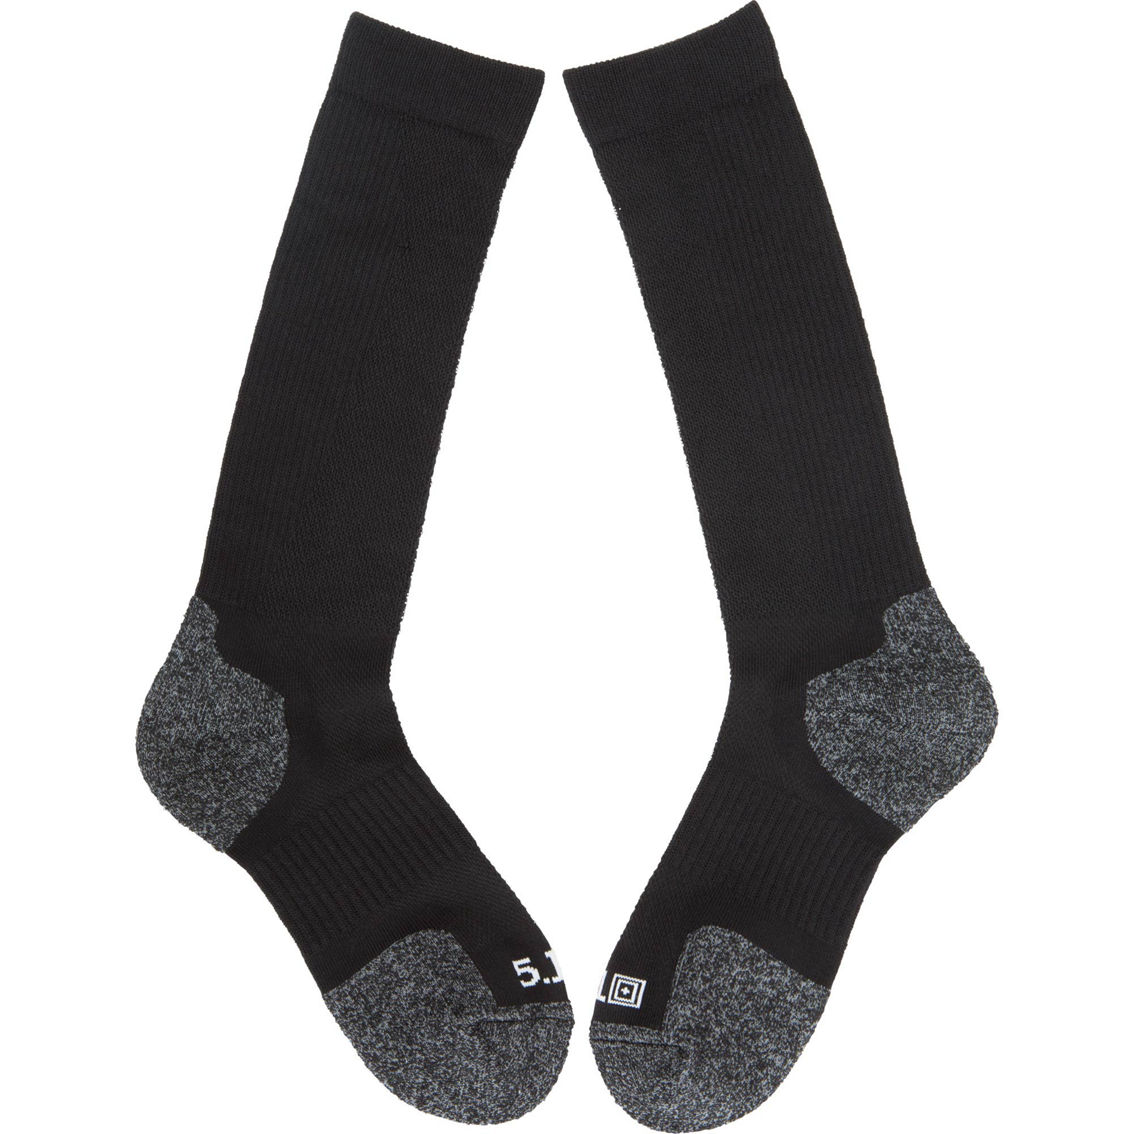 5.11 Slipstream Socks | Socks | Clothing & Accessories | Shop The Exchange